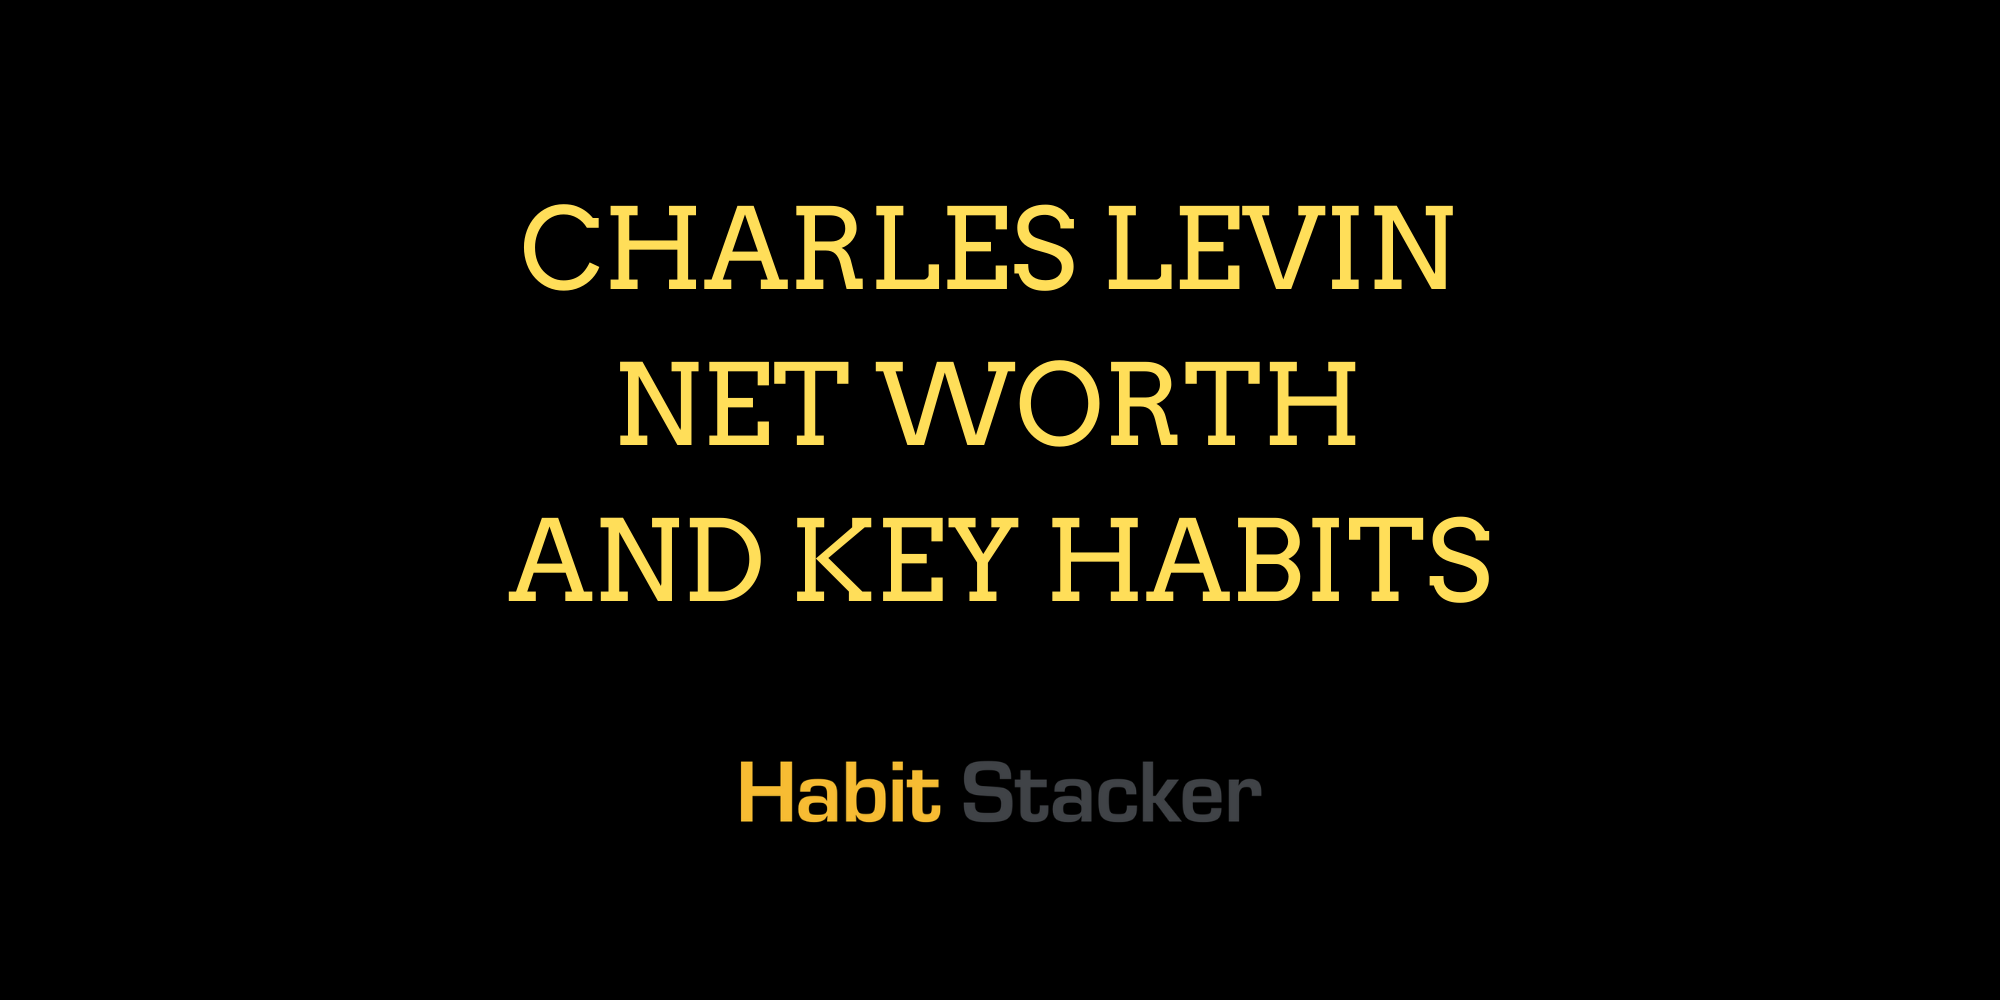 Charles Levin Net Worth and Key Habits